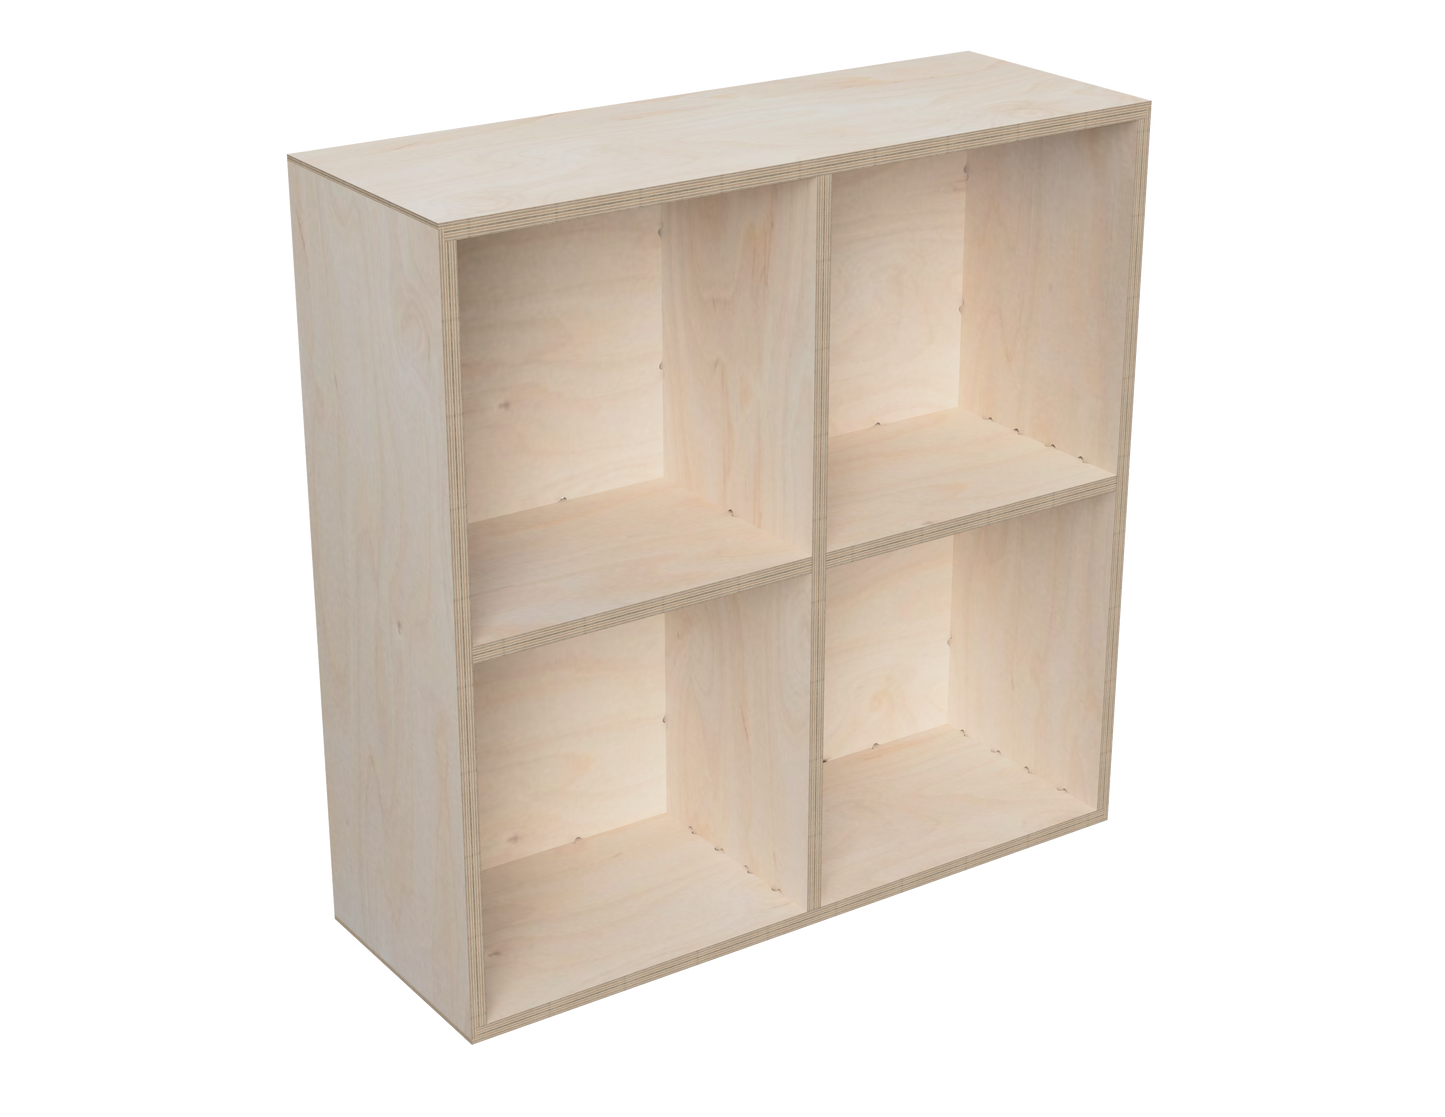 Wall Shelf - 2 x 2 Cubes DXF Files